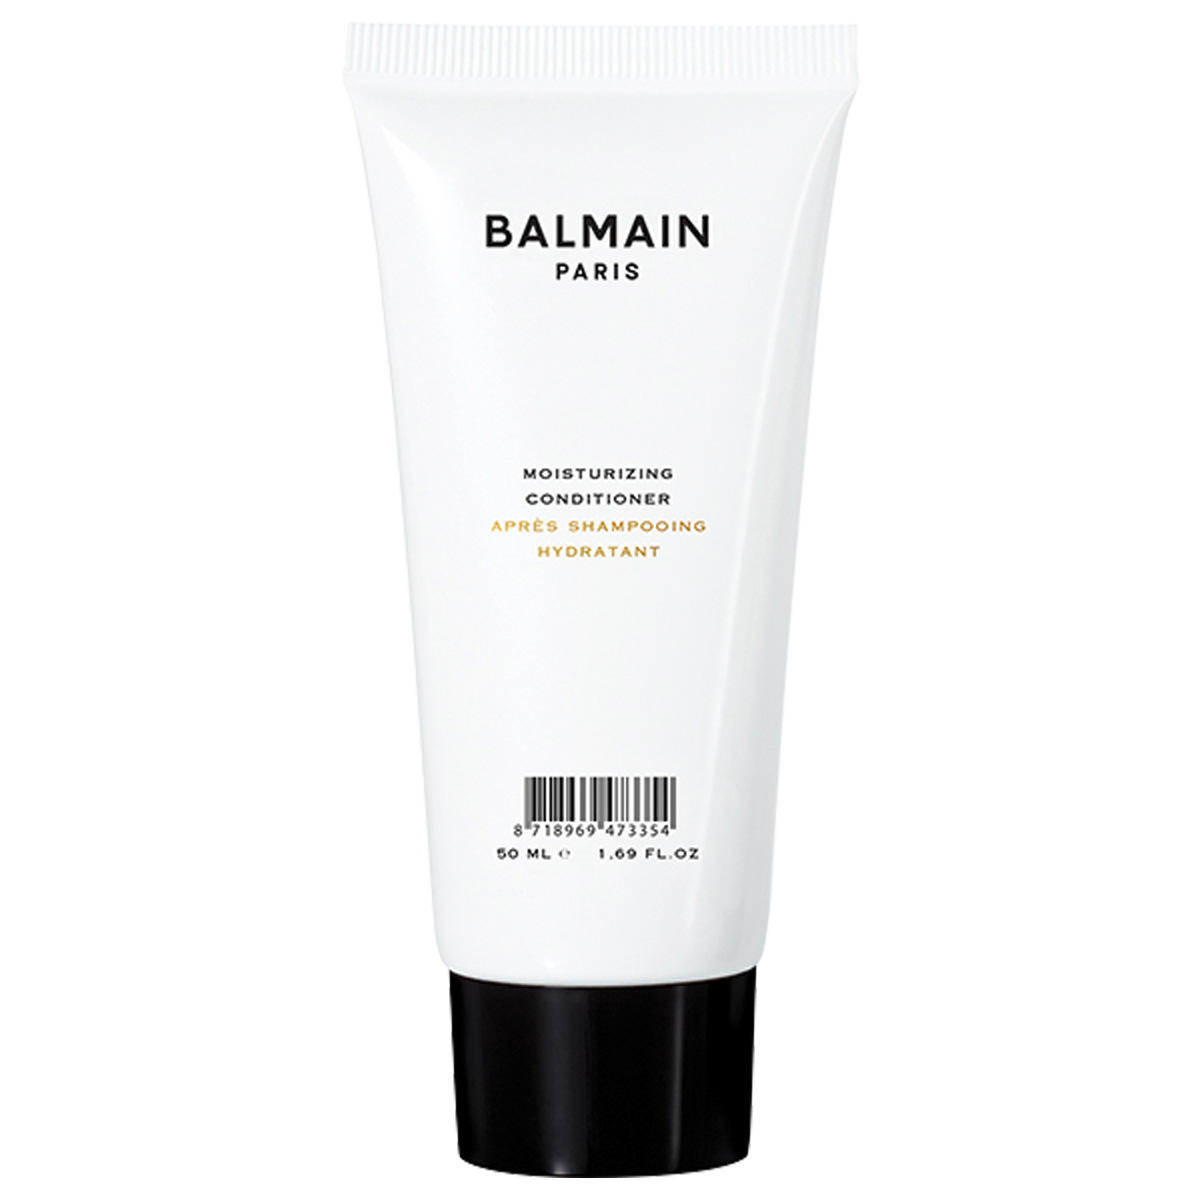 Balmain Hair Couture Travel Moisturizing Conditioner 50 ml - 1